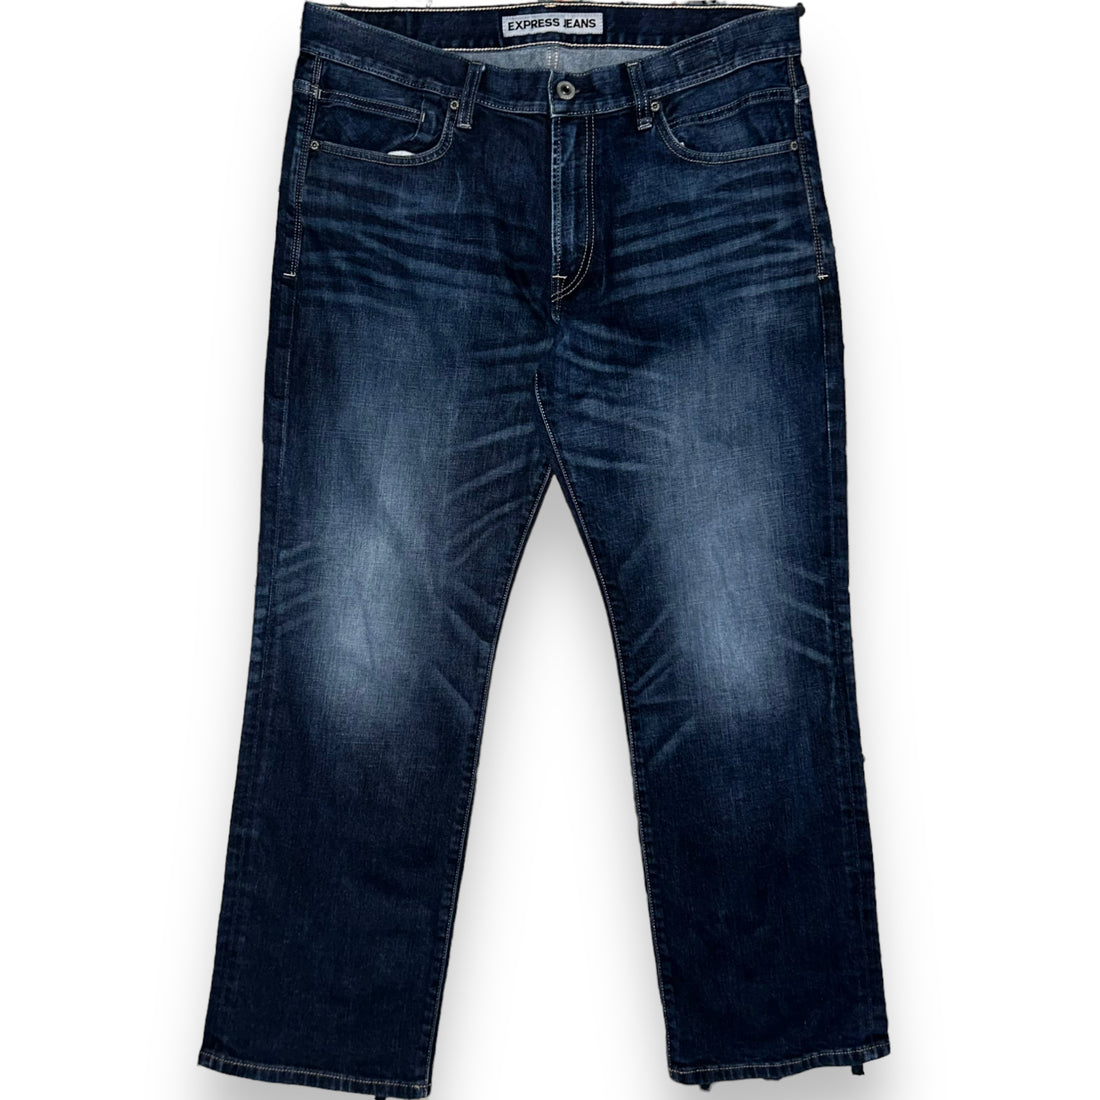 Jeans EXPRESS JEANS  (36 USA  XL)